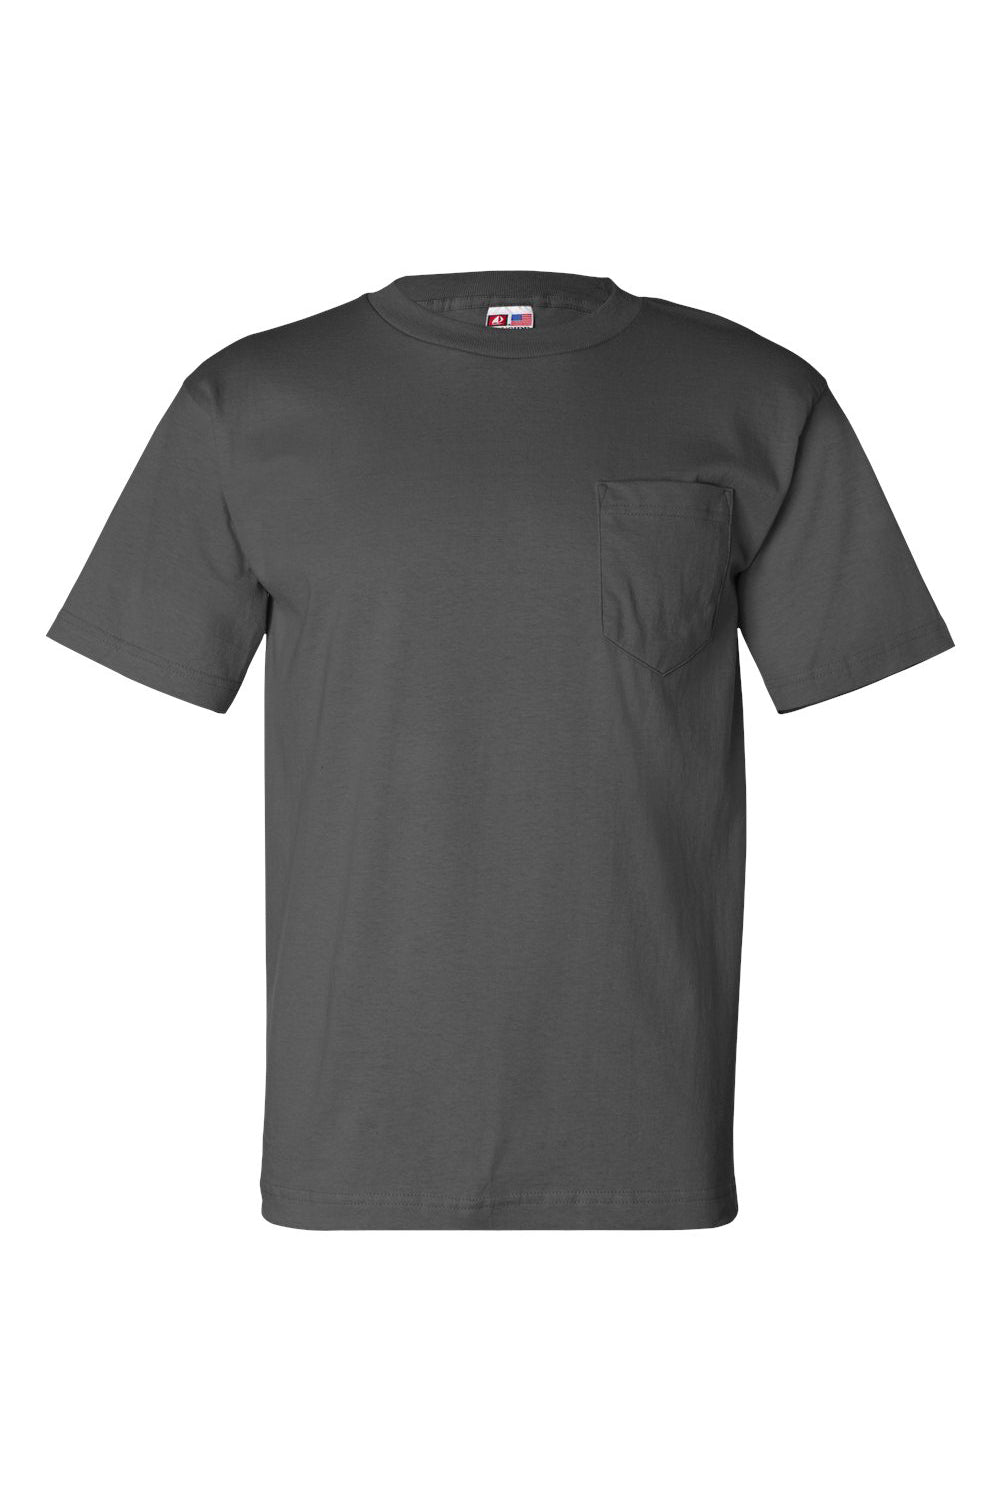 Bayside BA7100 Mens USA Made Short Sleeve Crewneck T-Shirt w/ Pocket Charcoal Grey Flat Front